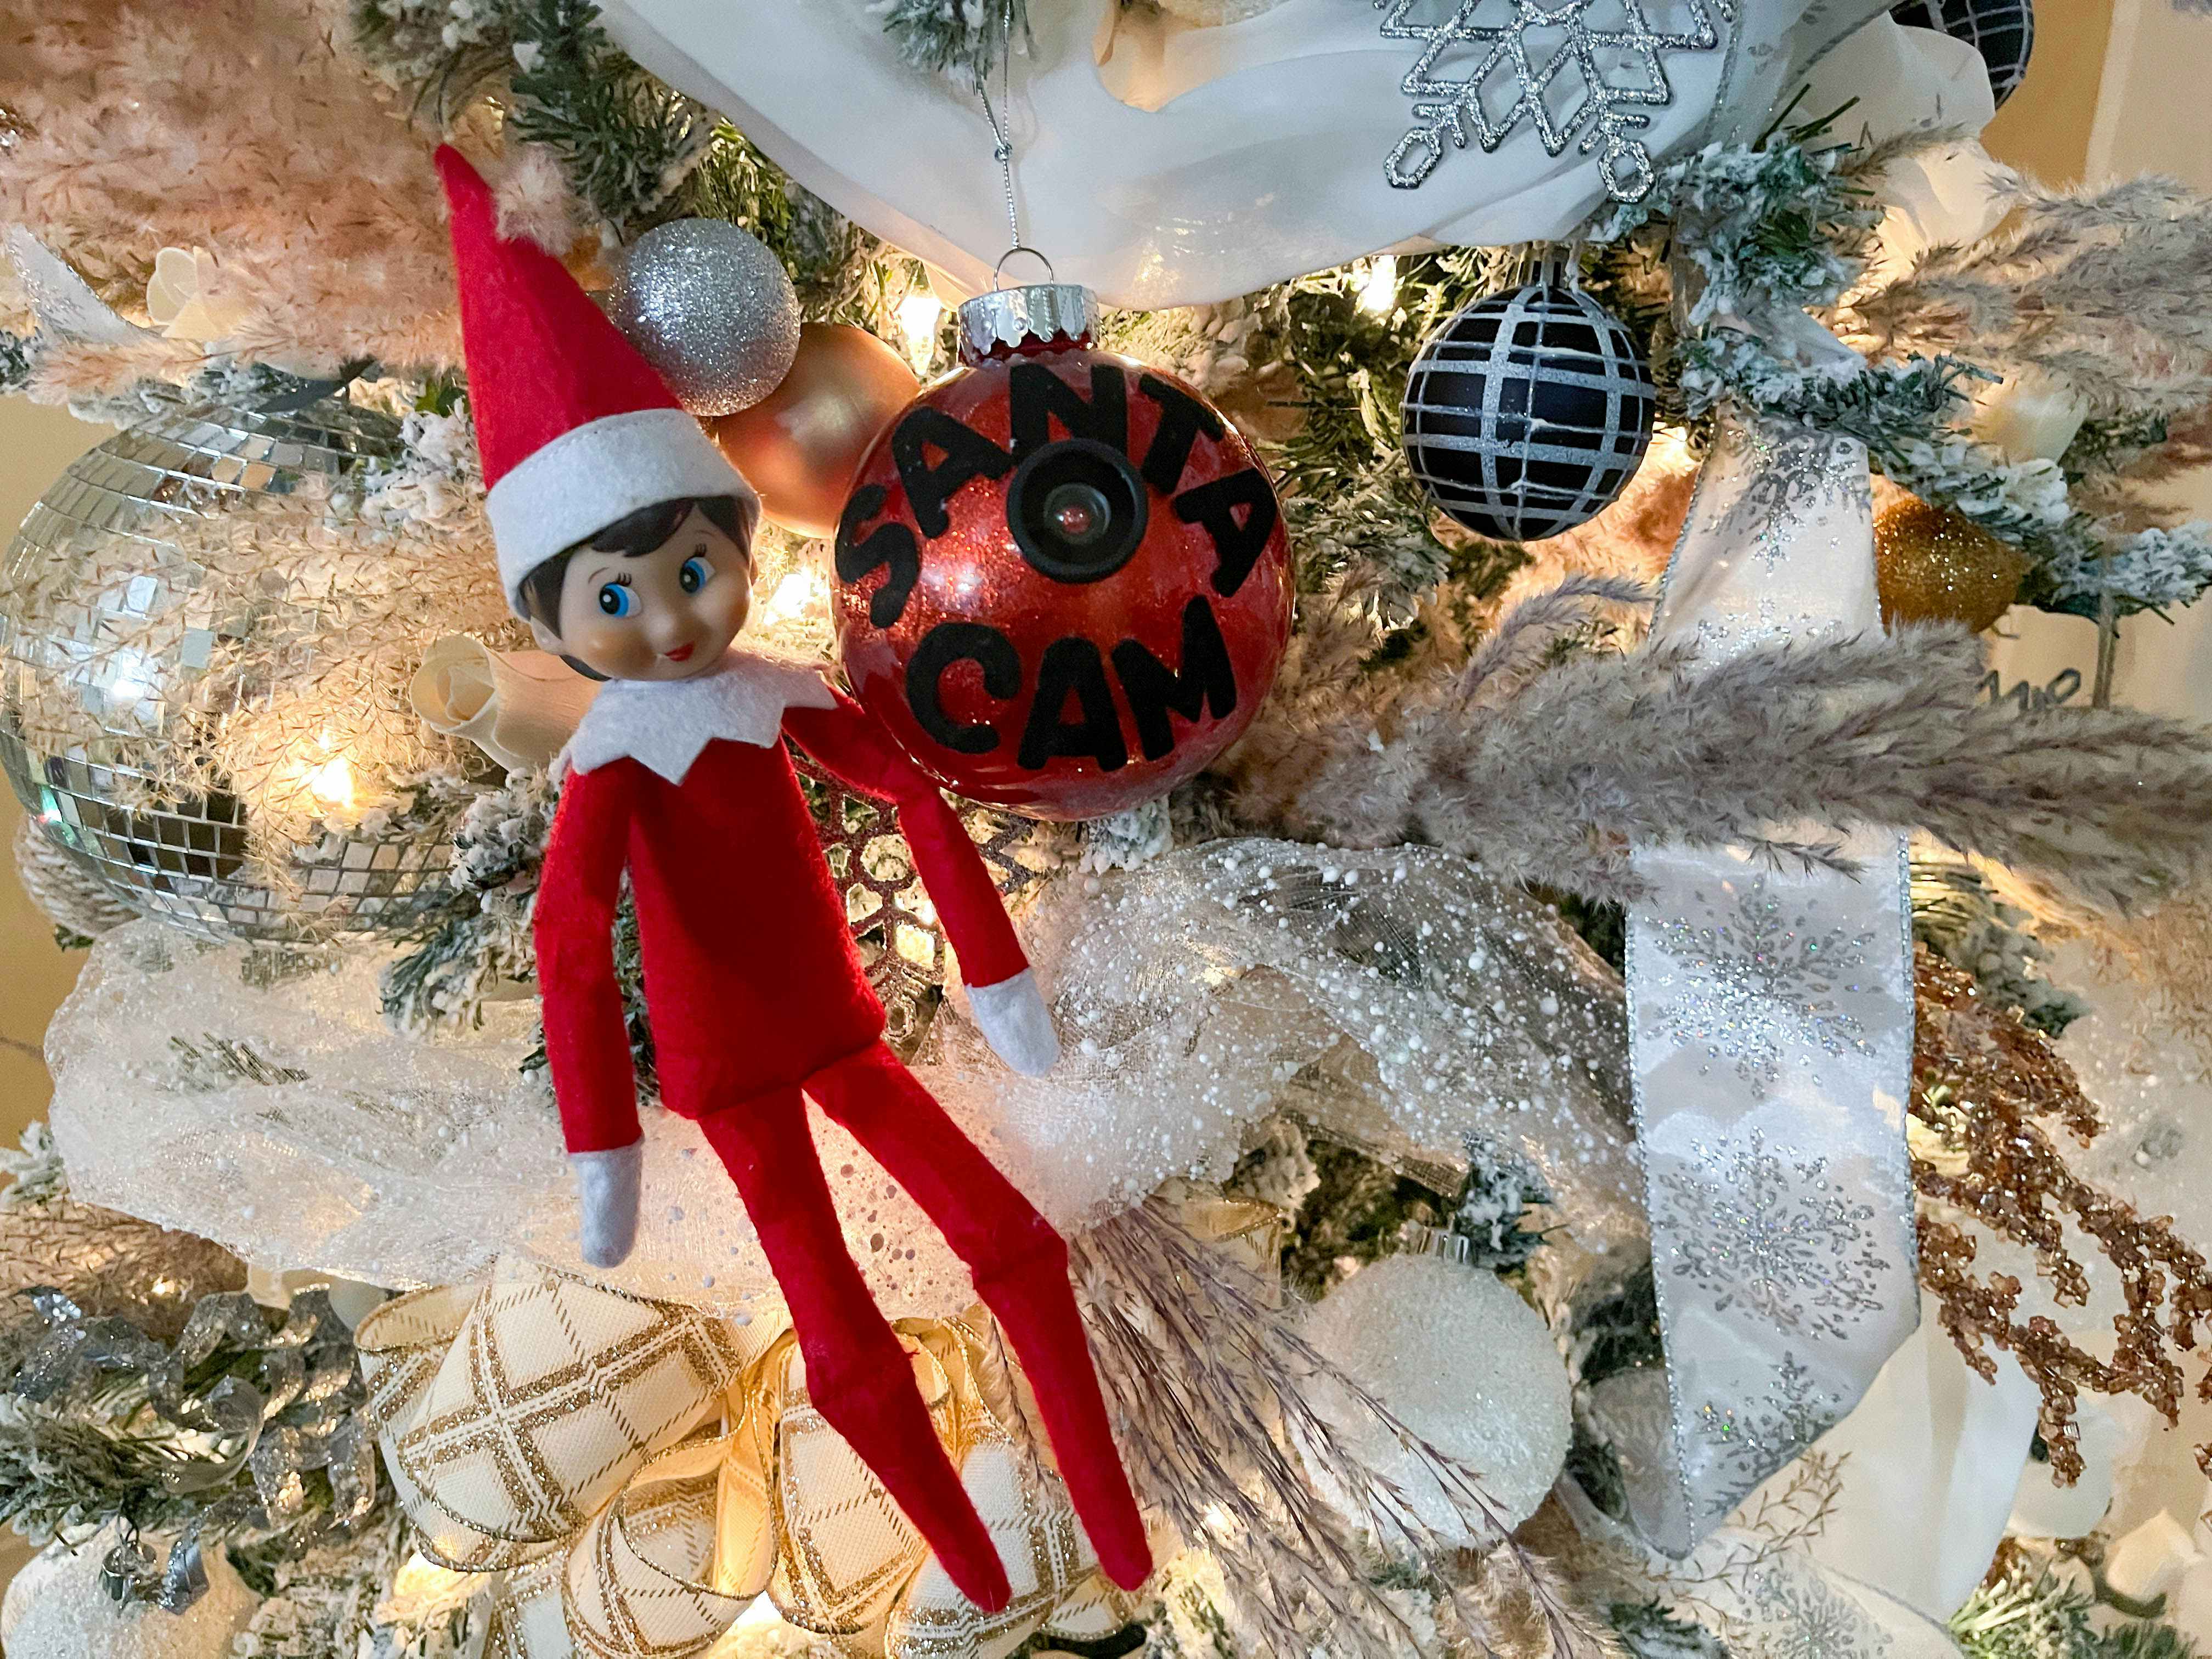 Elf on the shelf doll next to a hanging diy santa cam ornament